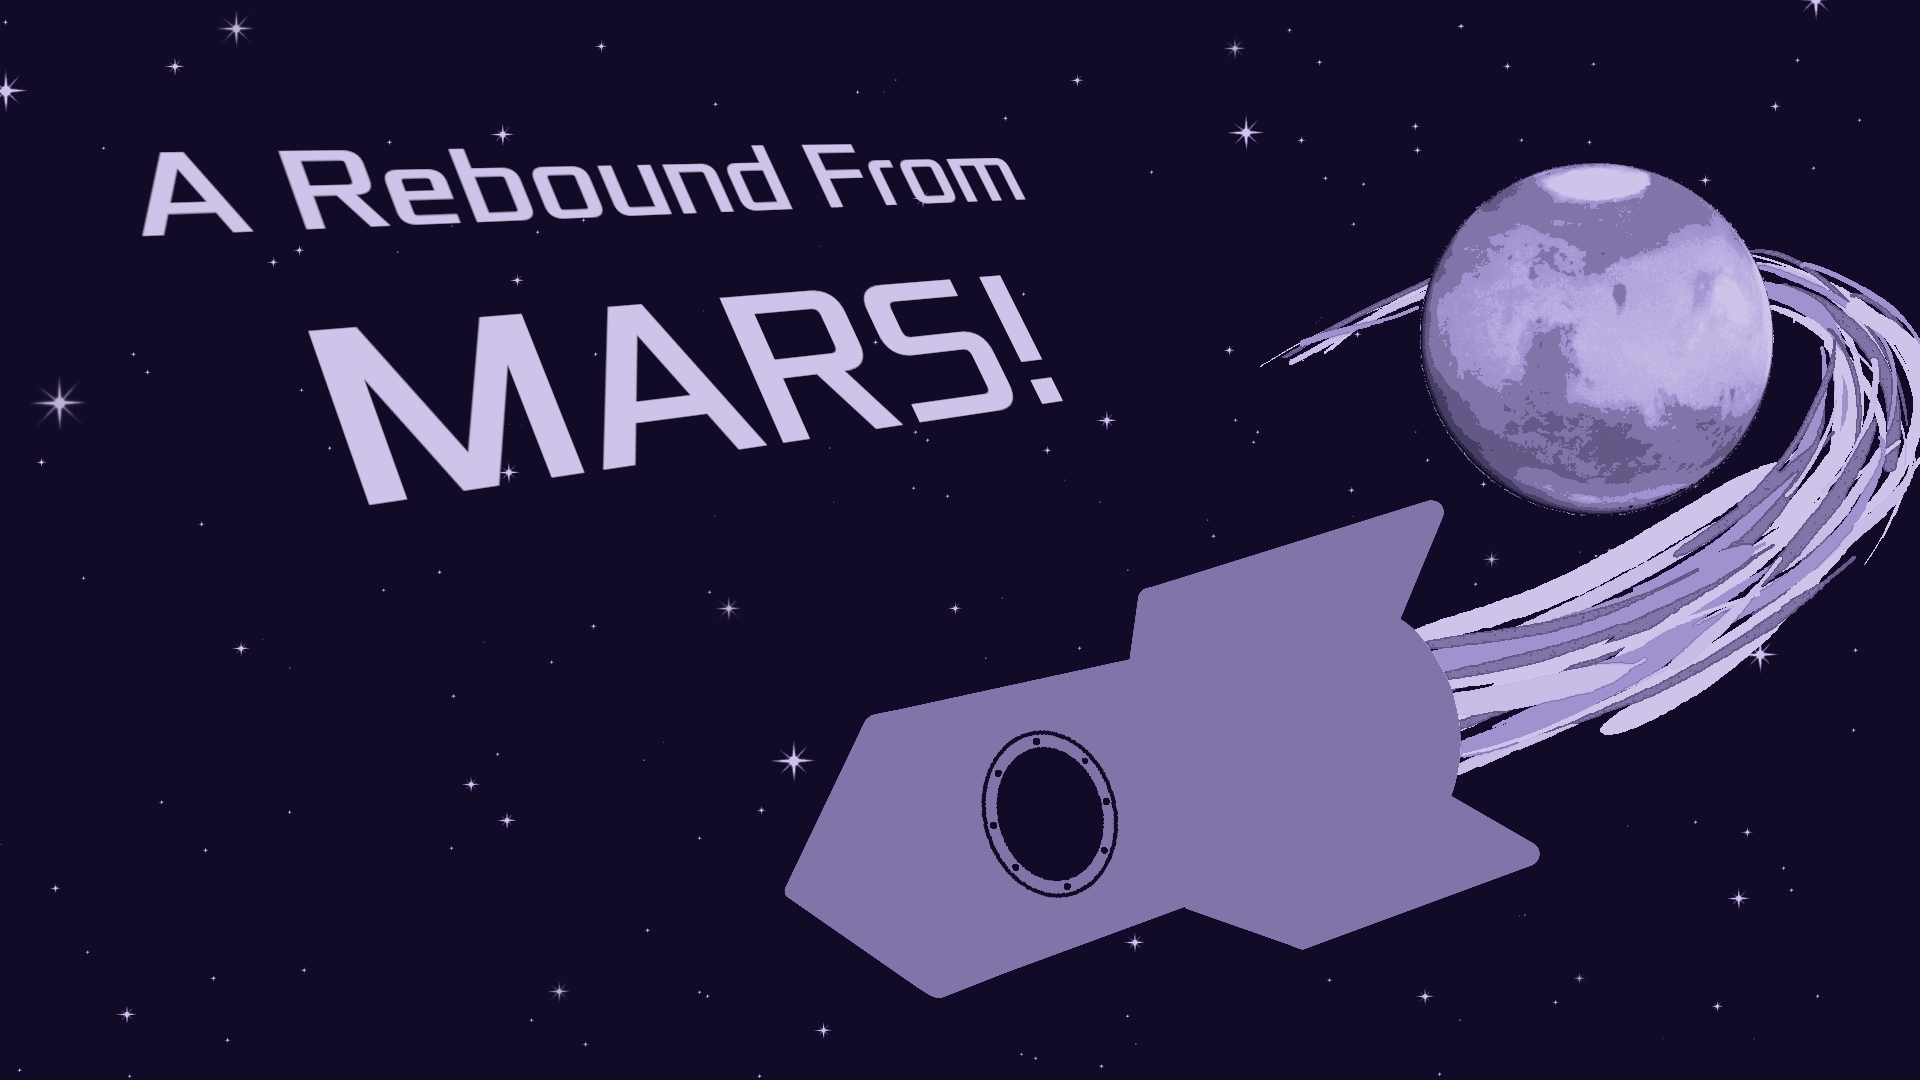 A Rebound From MARS!